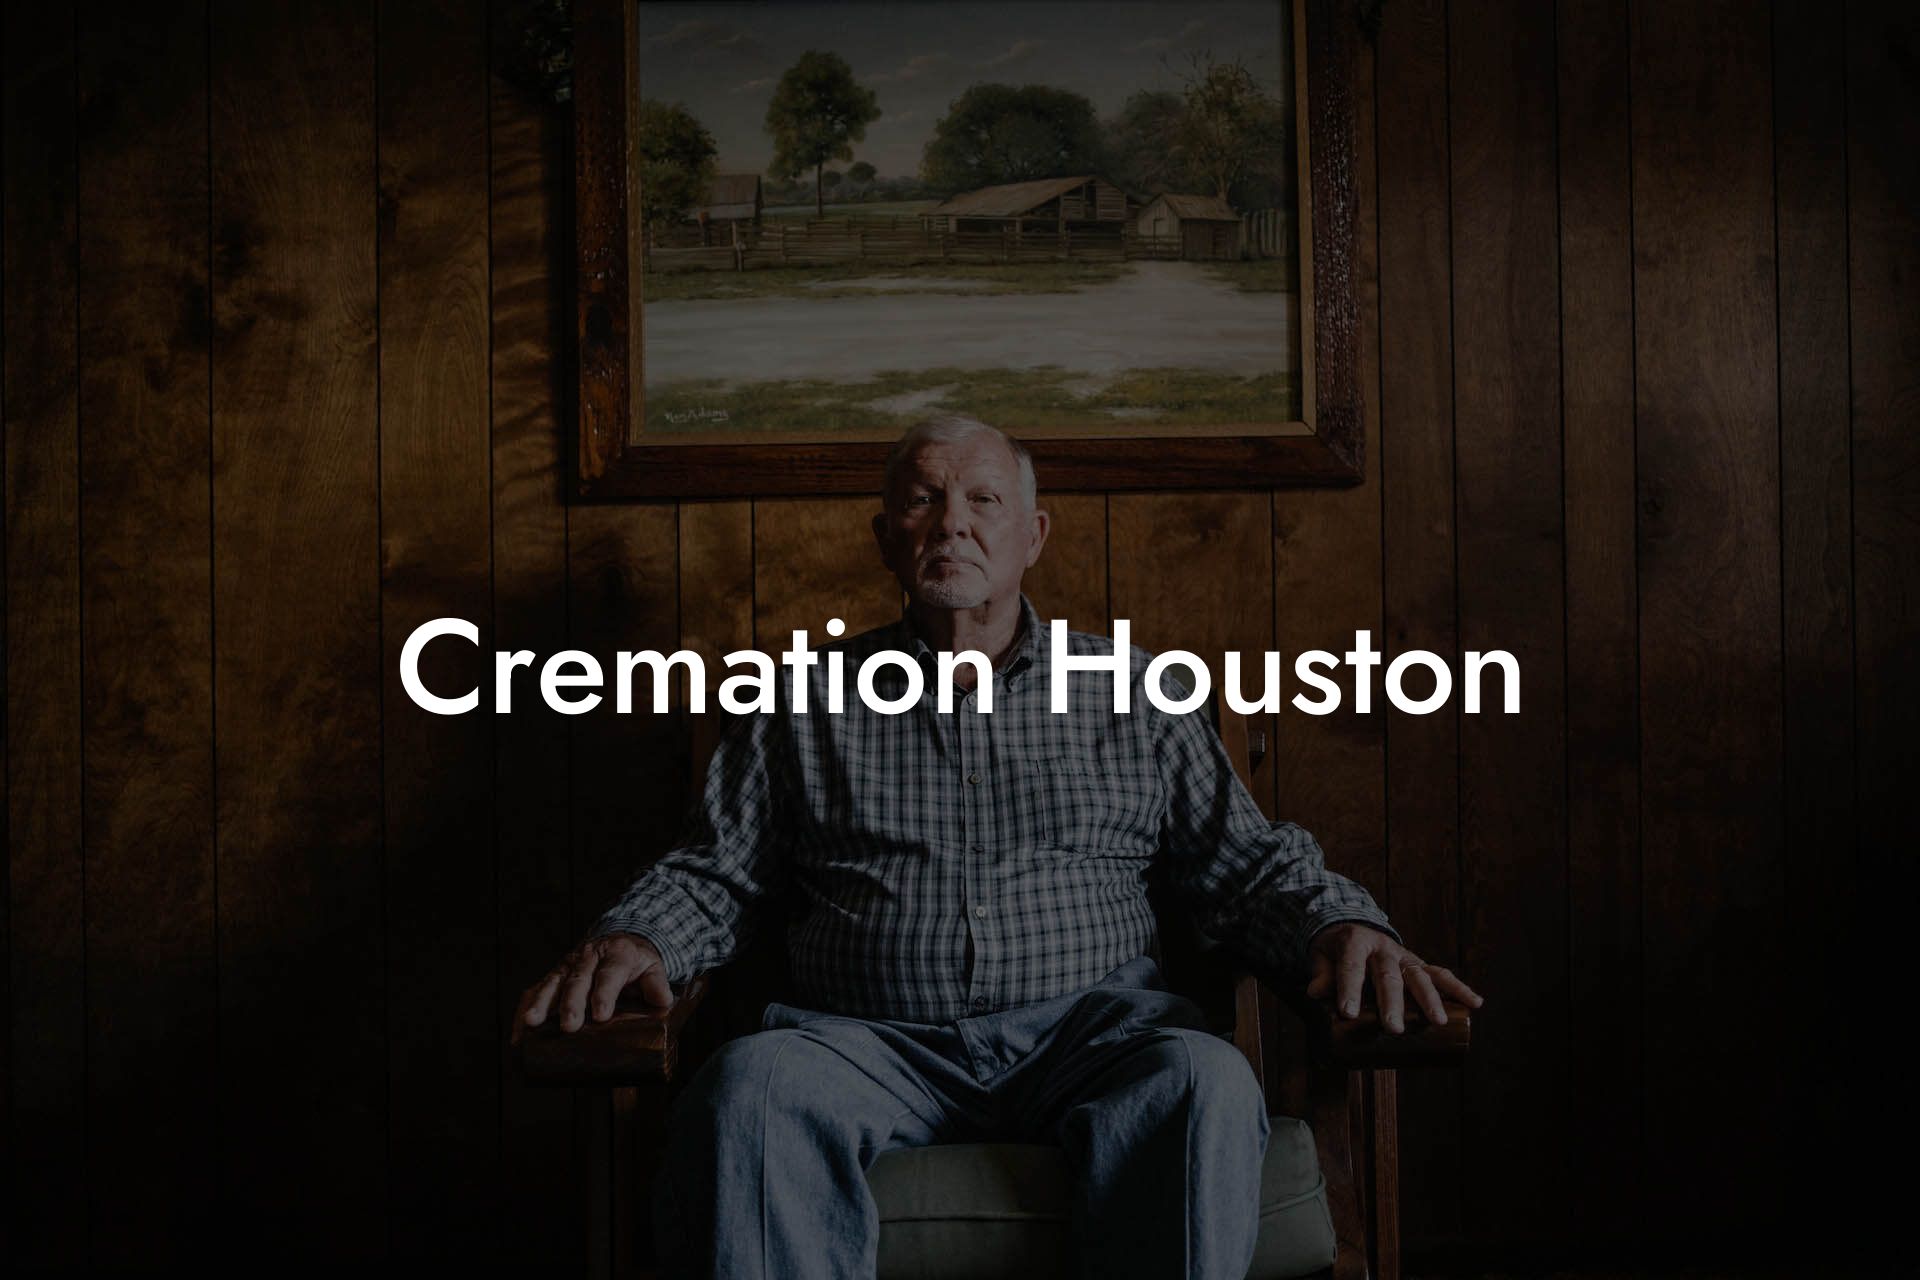 Cremation Houston